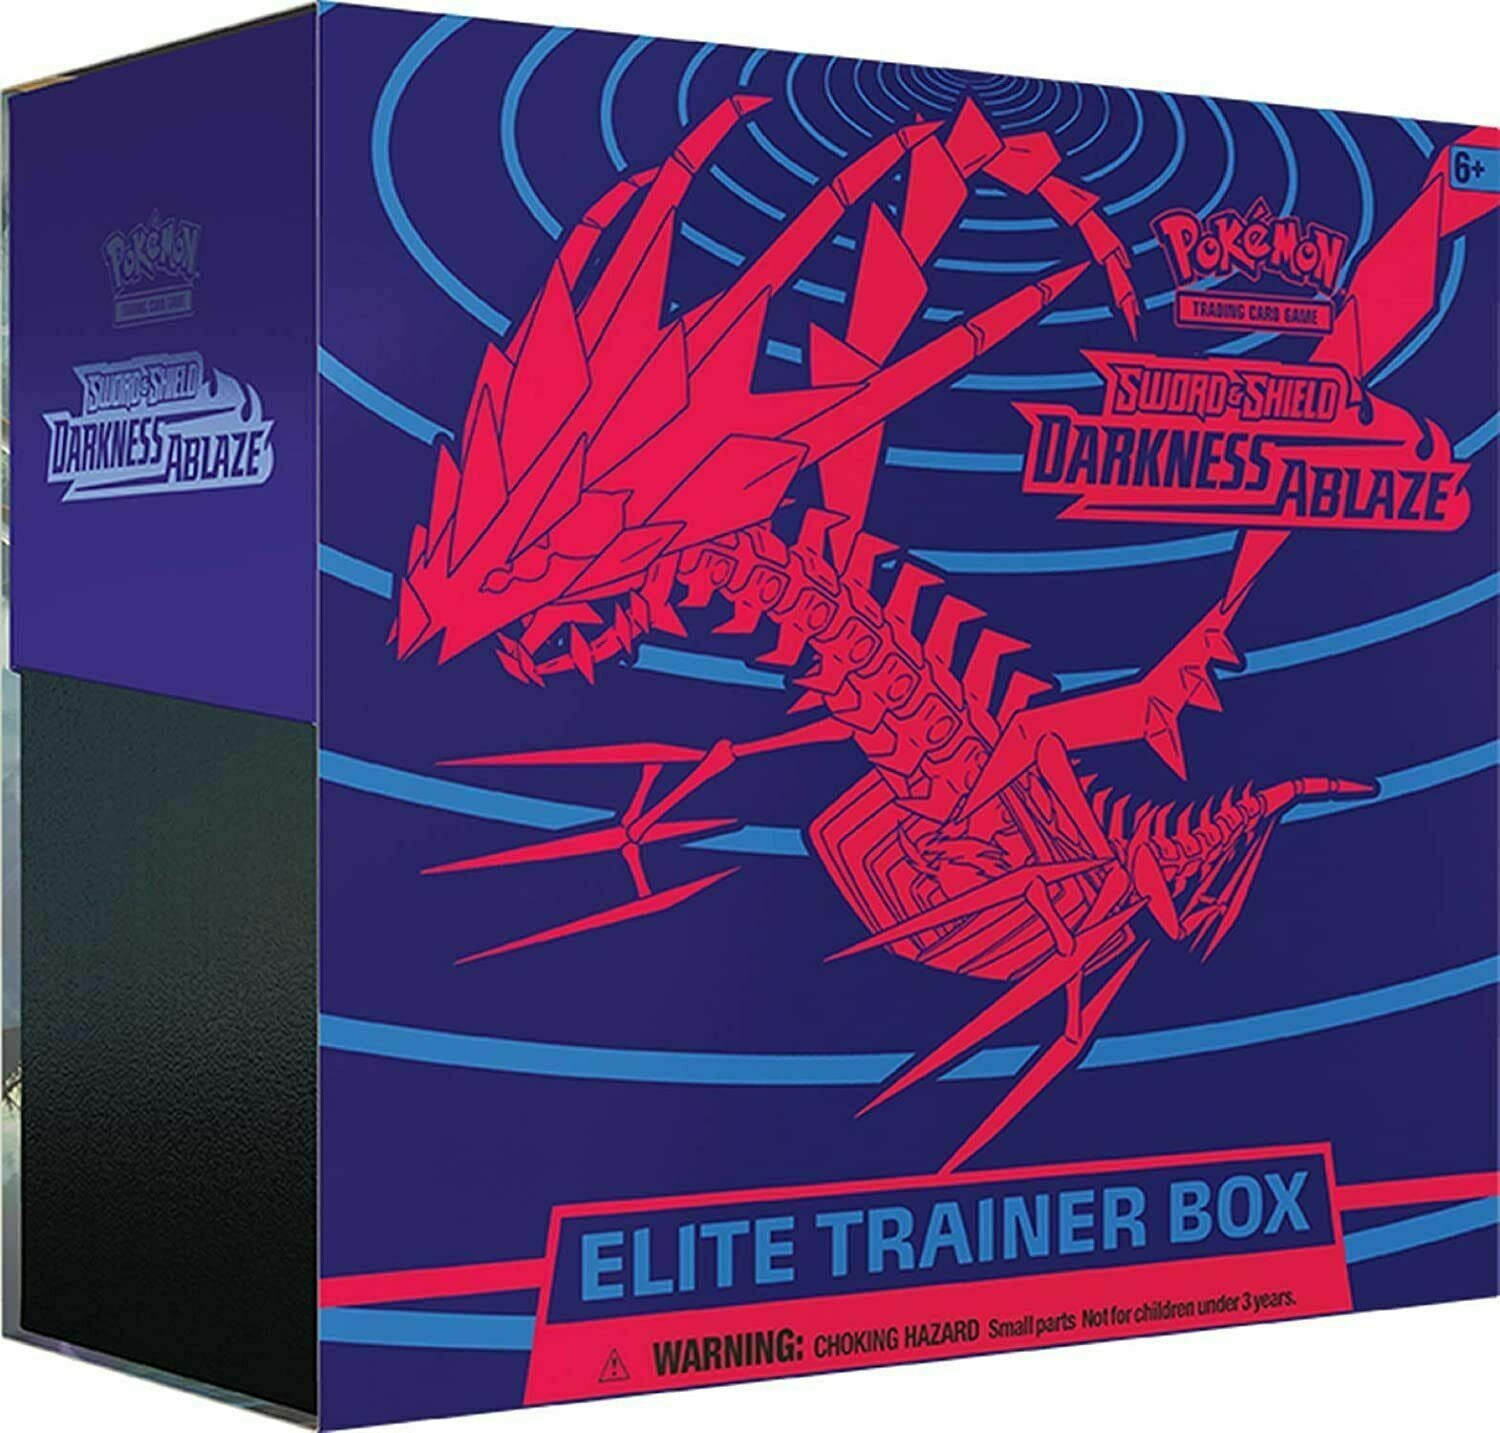 Pokémon: Darkness Ablaze Elite Trainer Box